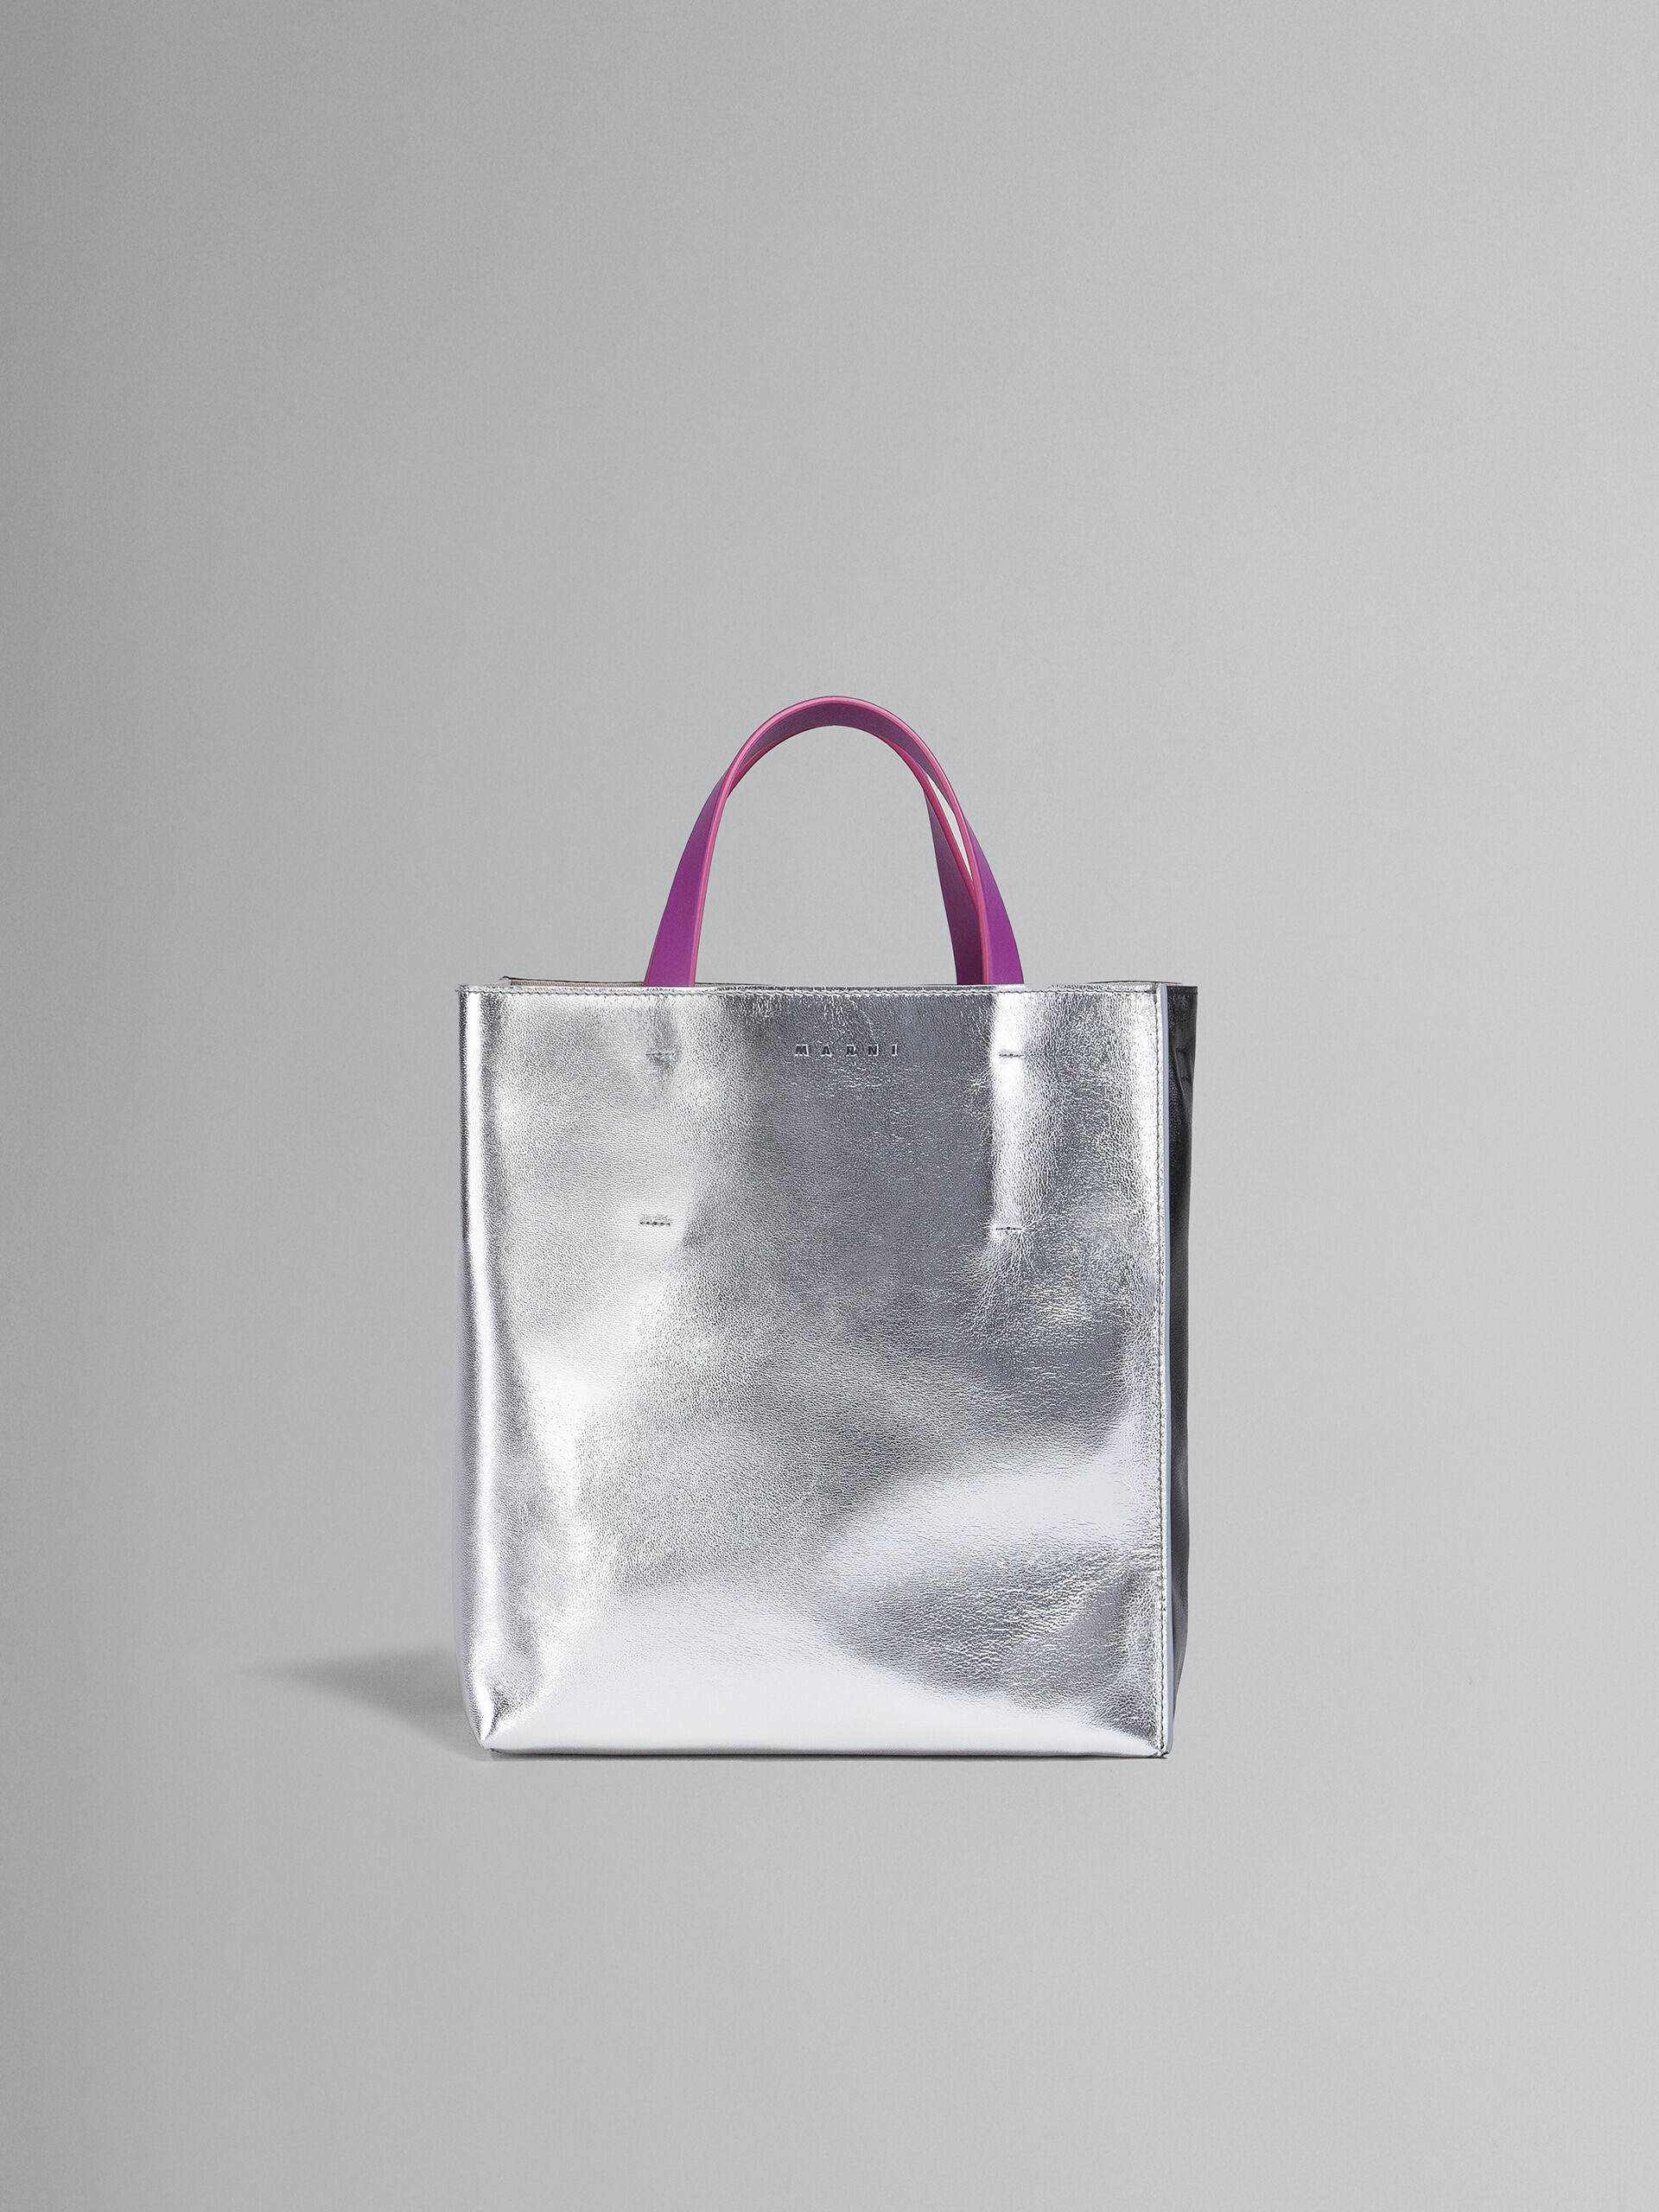 Borsa MUSEO SOFT in pelle metallizzata argento nero fuxia - Borse shopping - Image 1